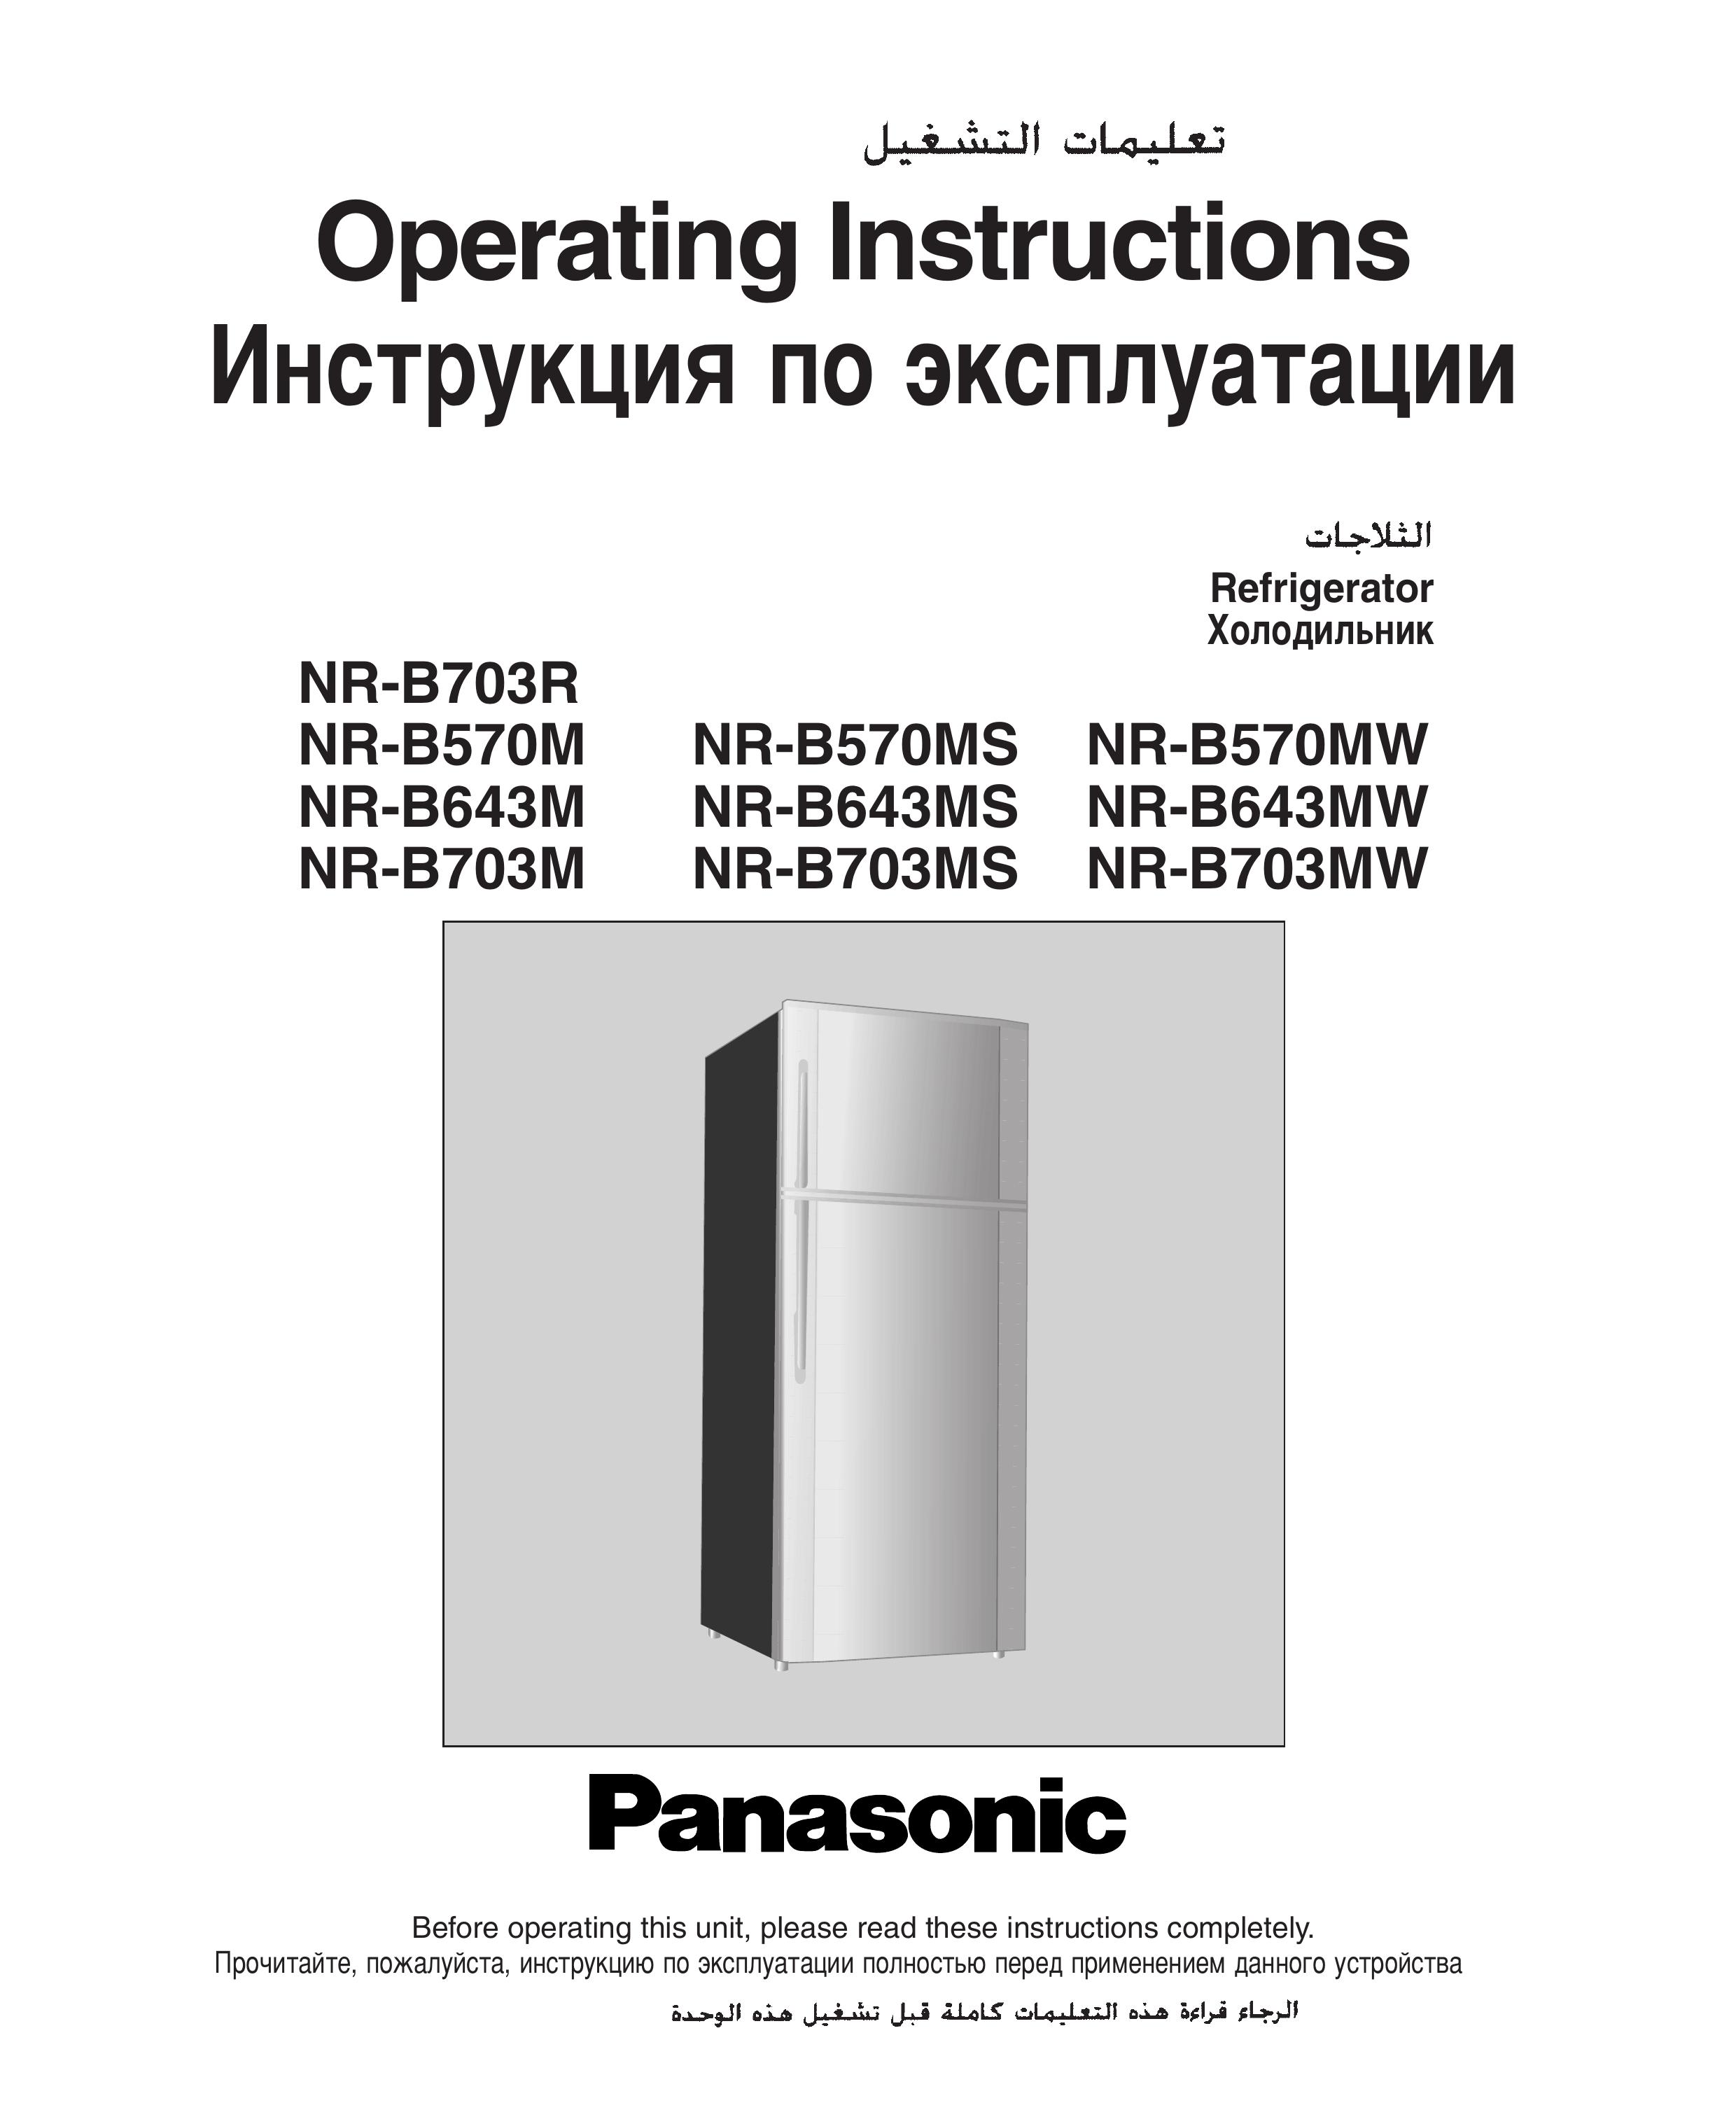 Panasonic NR-B703MS Refrigerator User Manual